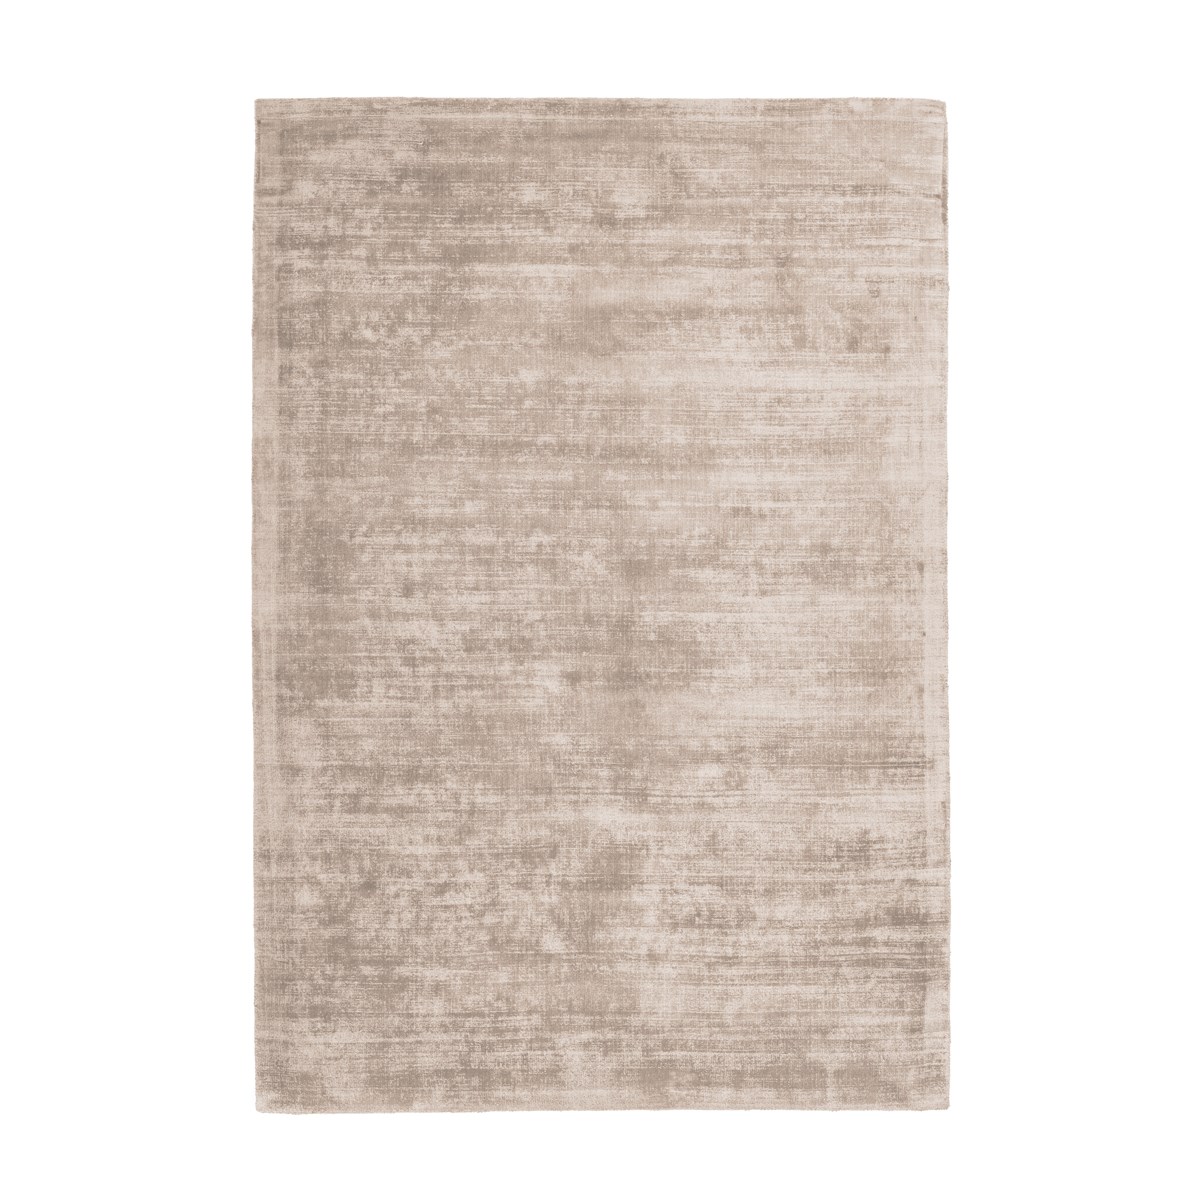 Tapis moderne en Soie Beige clair 80x150 cm